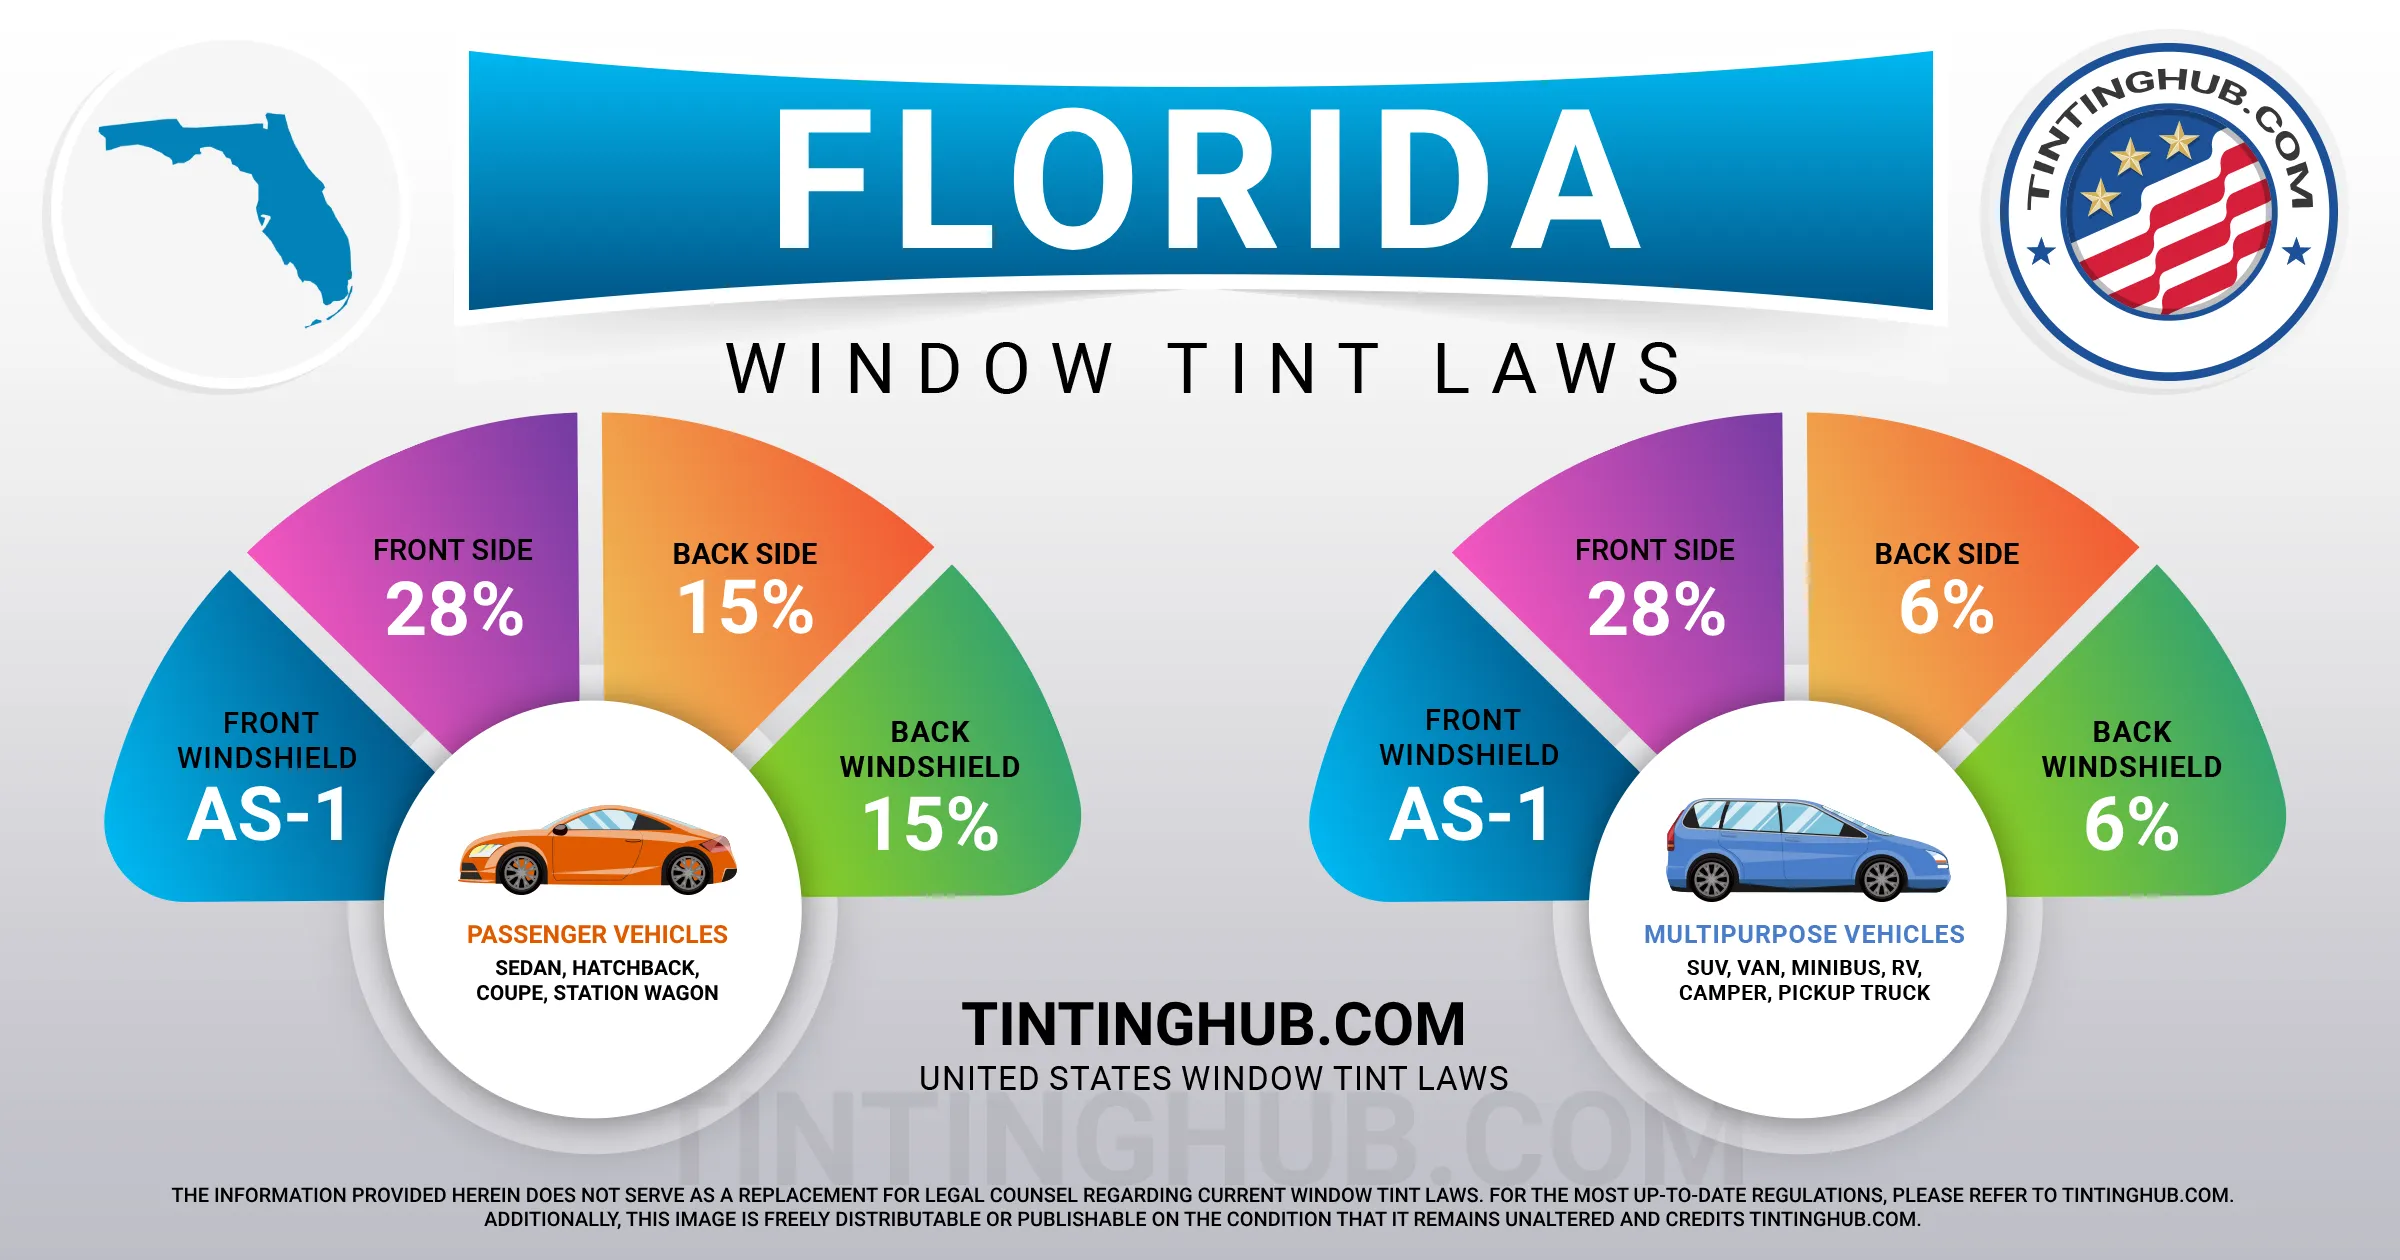 Florida Automobile Window Tint Laws